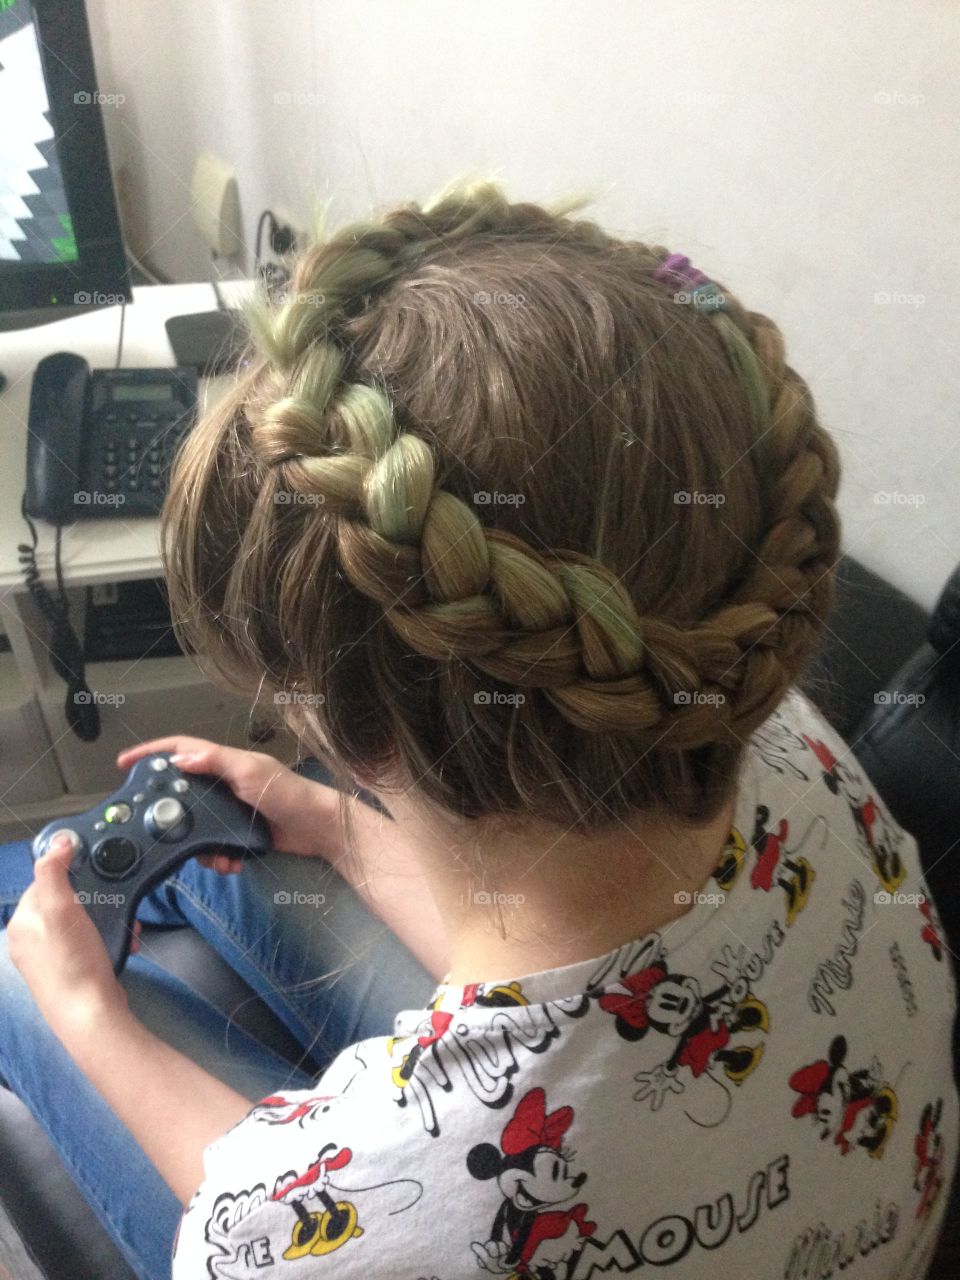 Girl with braided hair